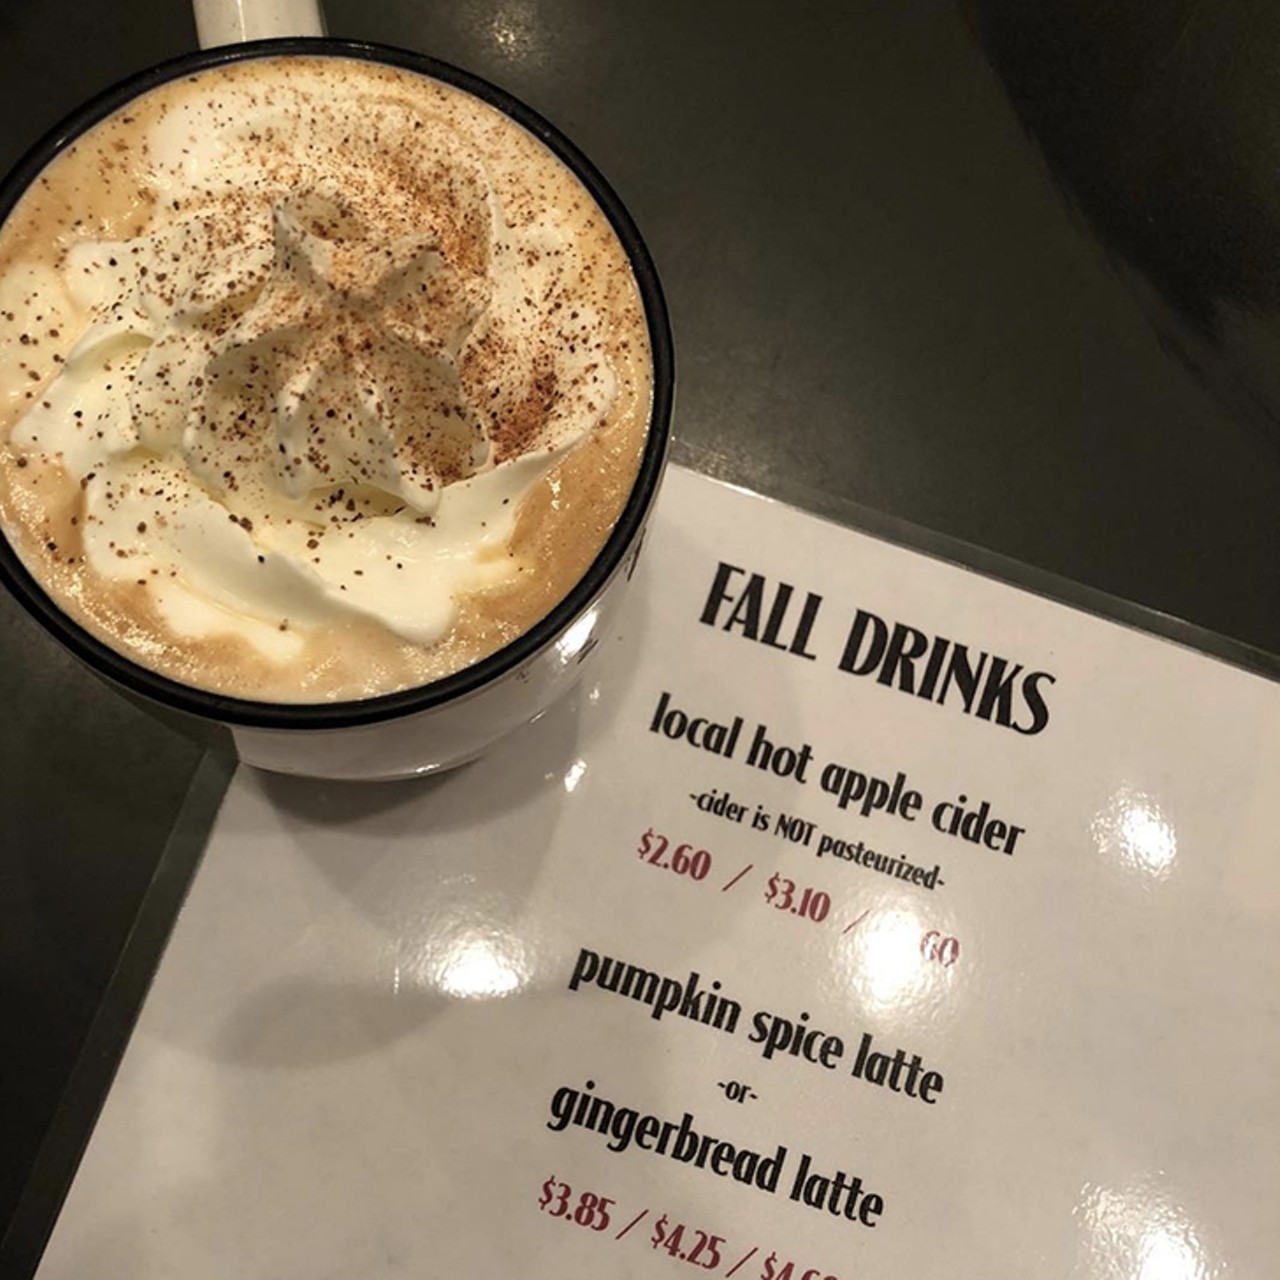 Sidewinder Coffee
Pumpkin-spice latte
4181 Hamilton Ave., Northside
Photo via Instagram.com/SidewinderCoffee